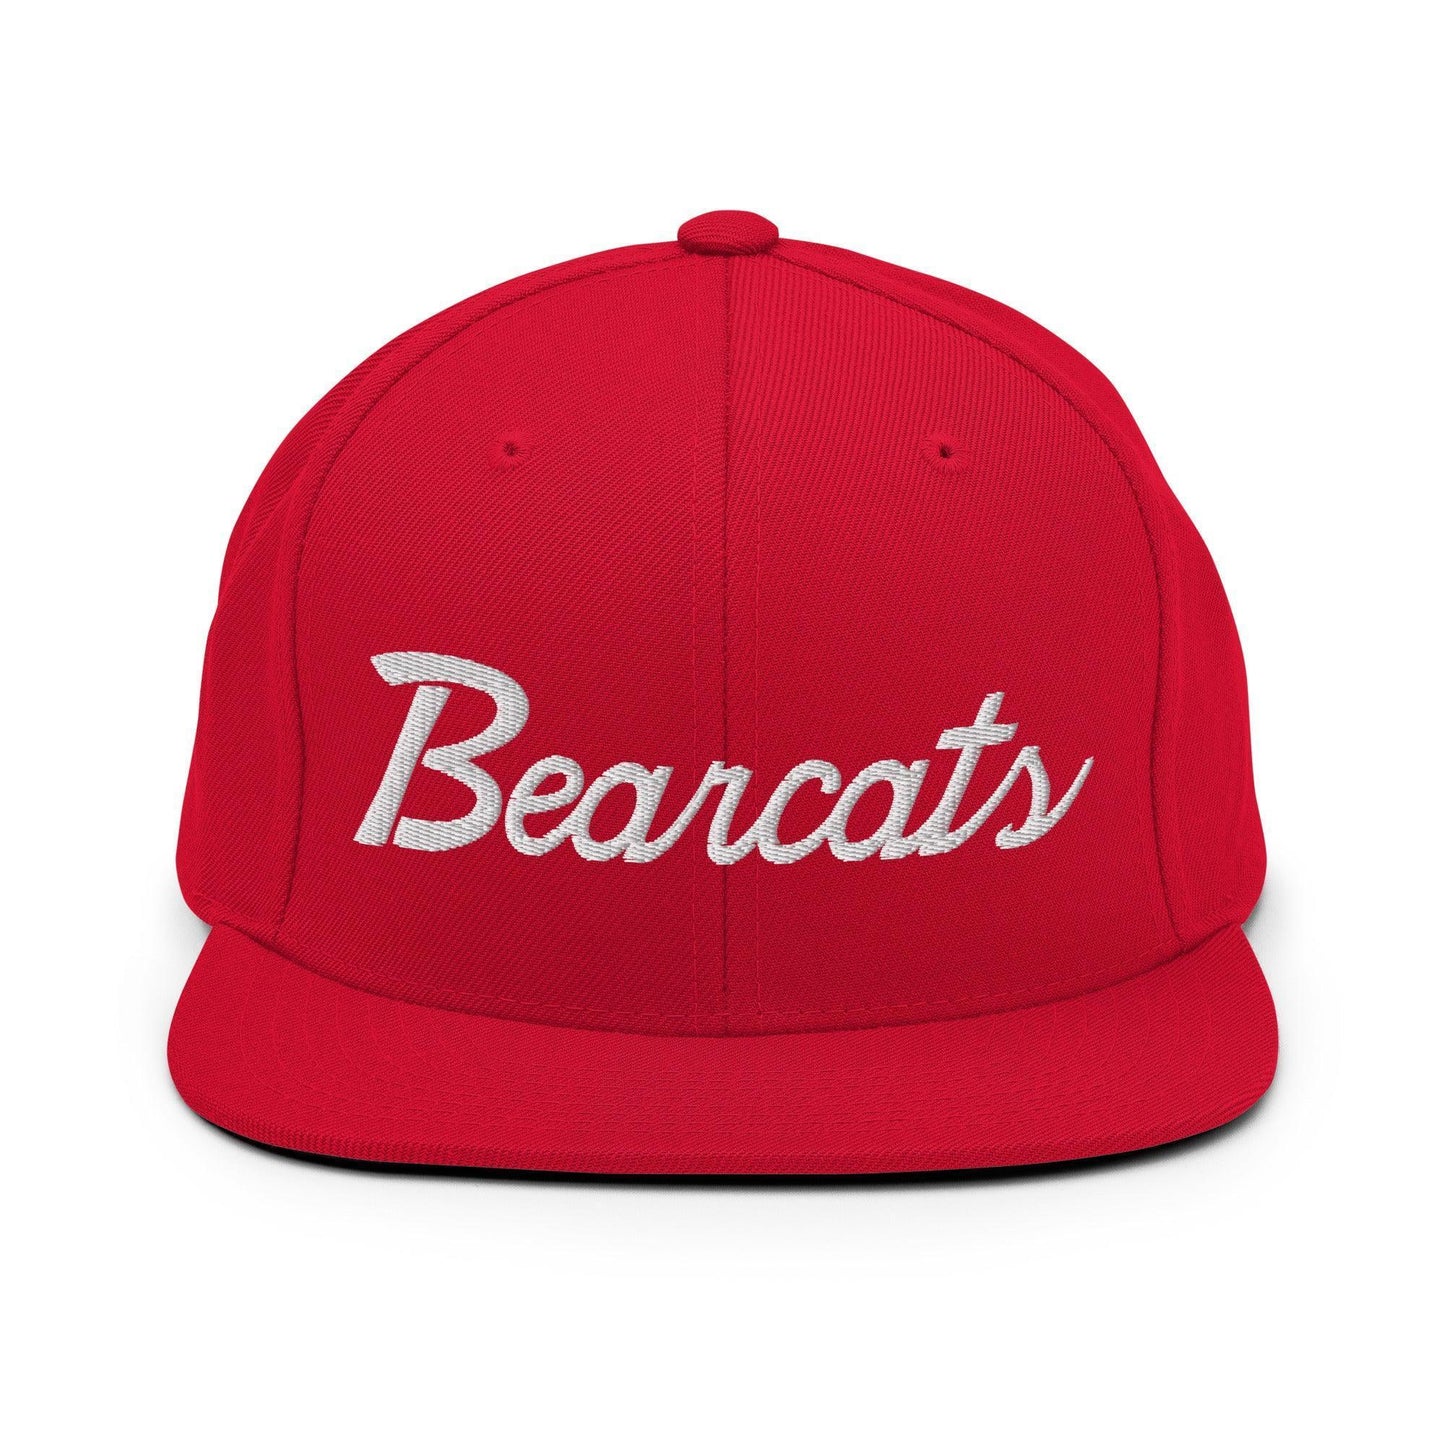 Bearcats School Mascot Script Snapback Hat Red